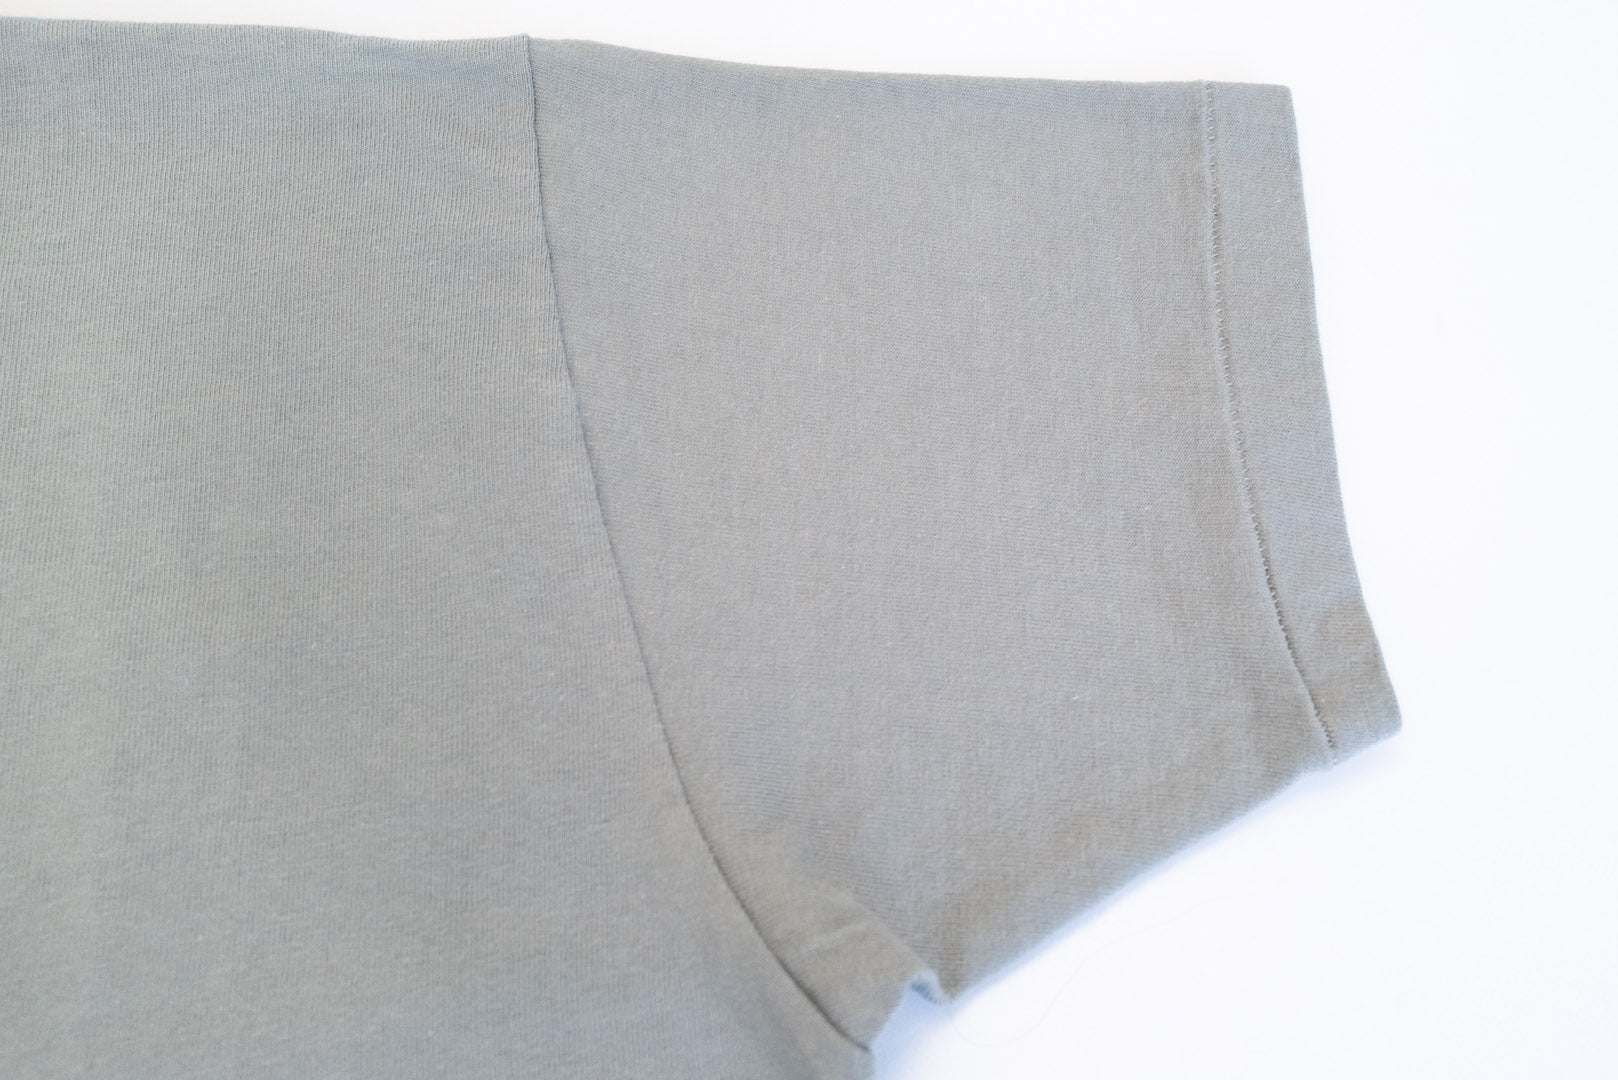 Unique Garment 'No Introduction Fee' Loopwheeled Tee (Grey)